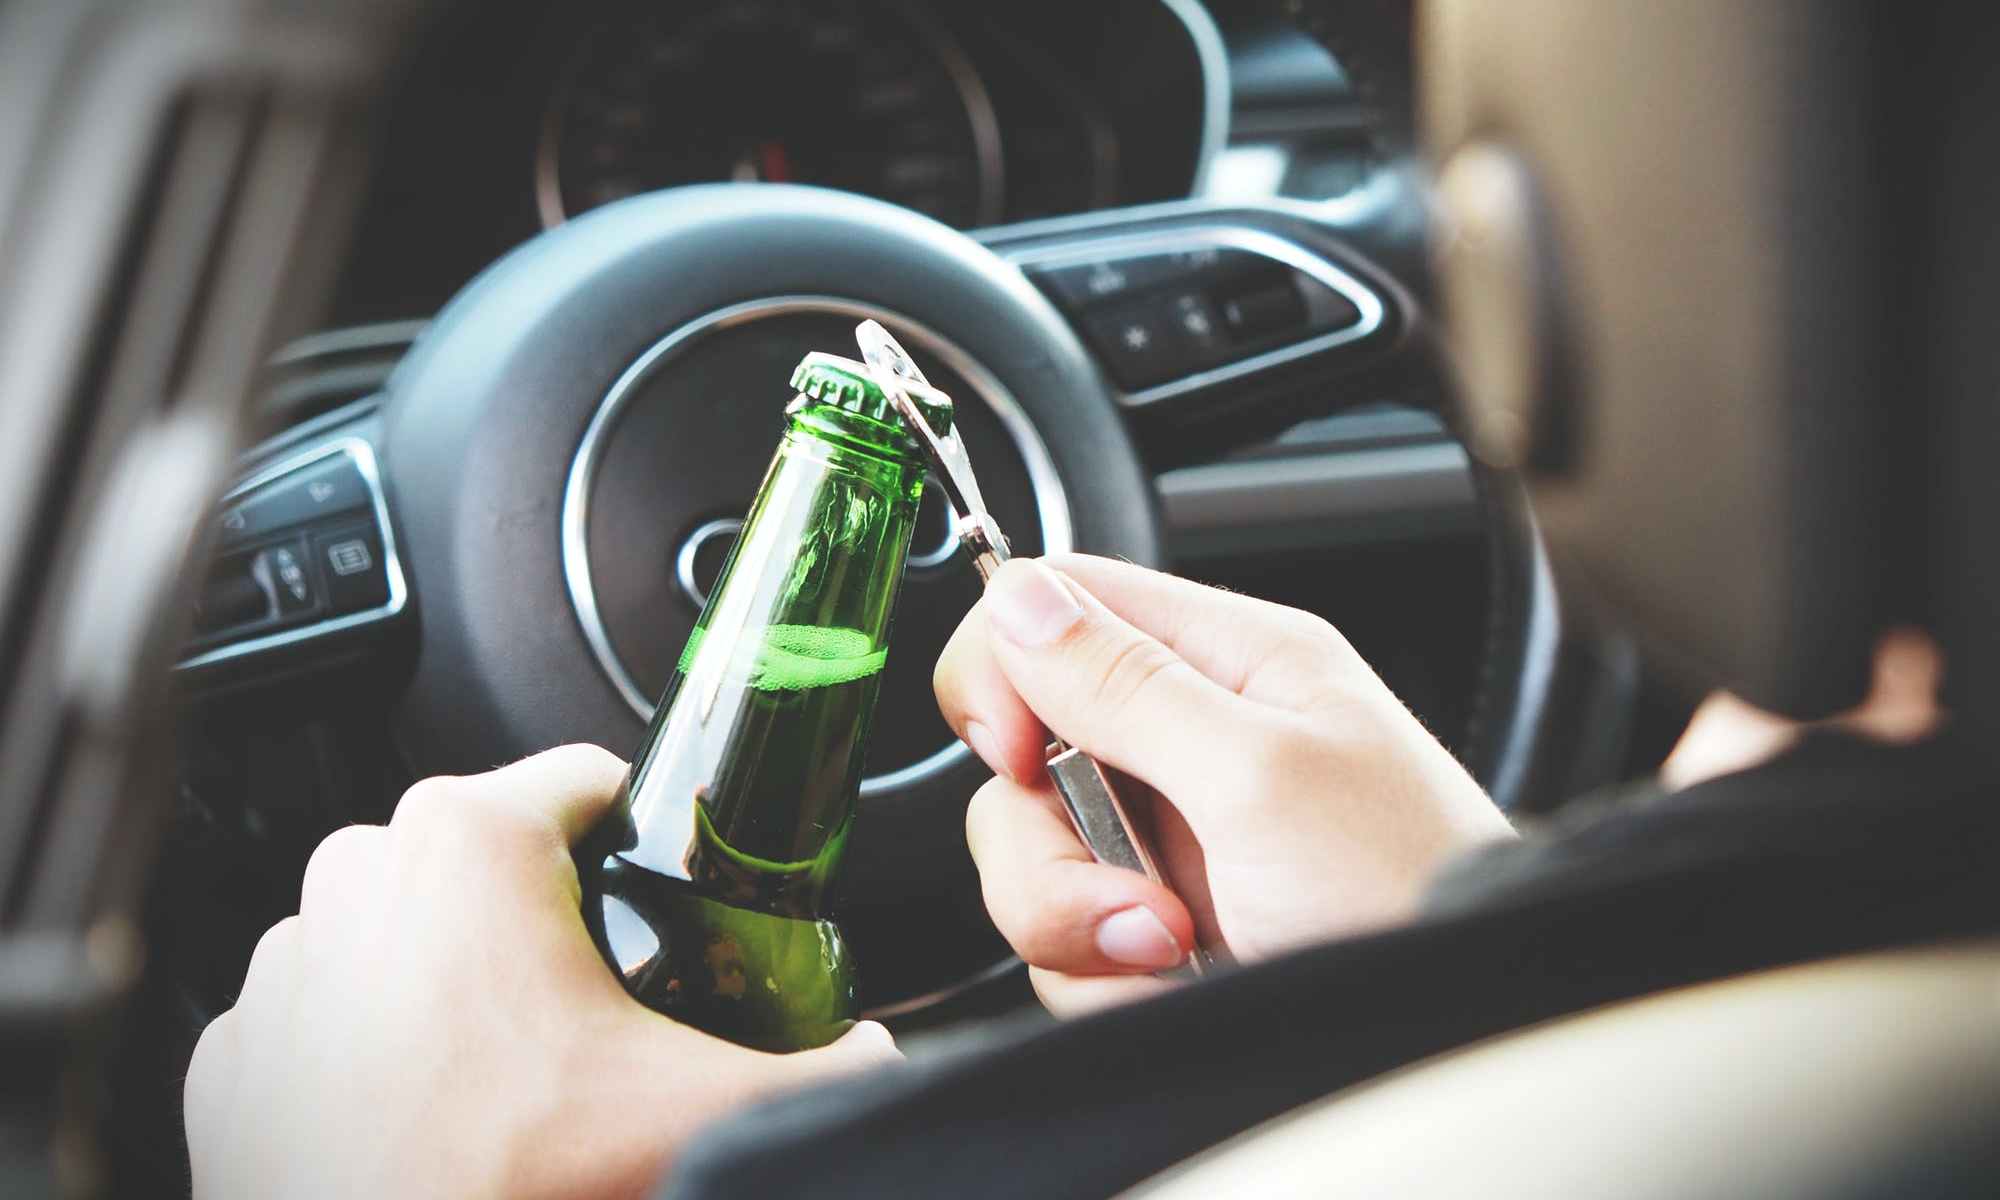 Person opening bottle of beer in car behind wheel